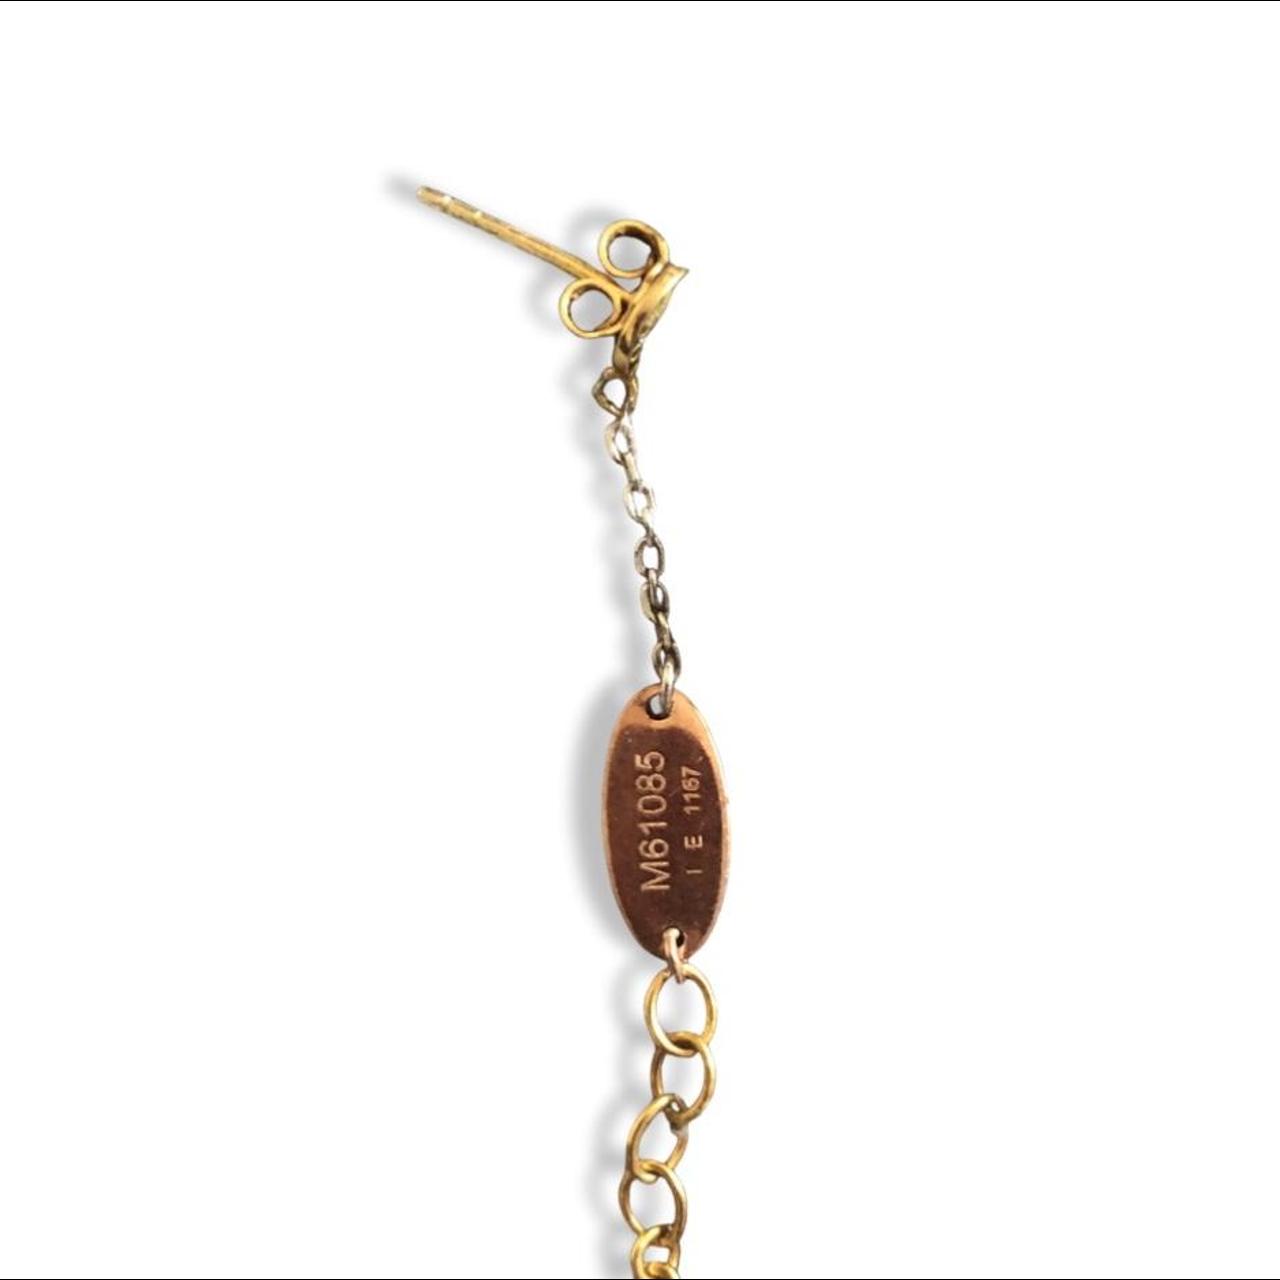 Louis Vuitton Logomania Drop Earrings